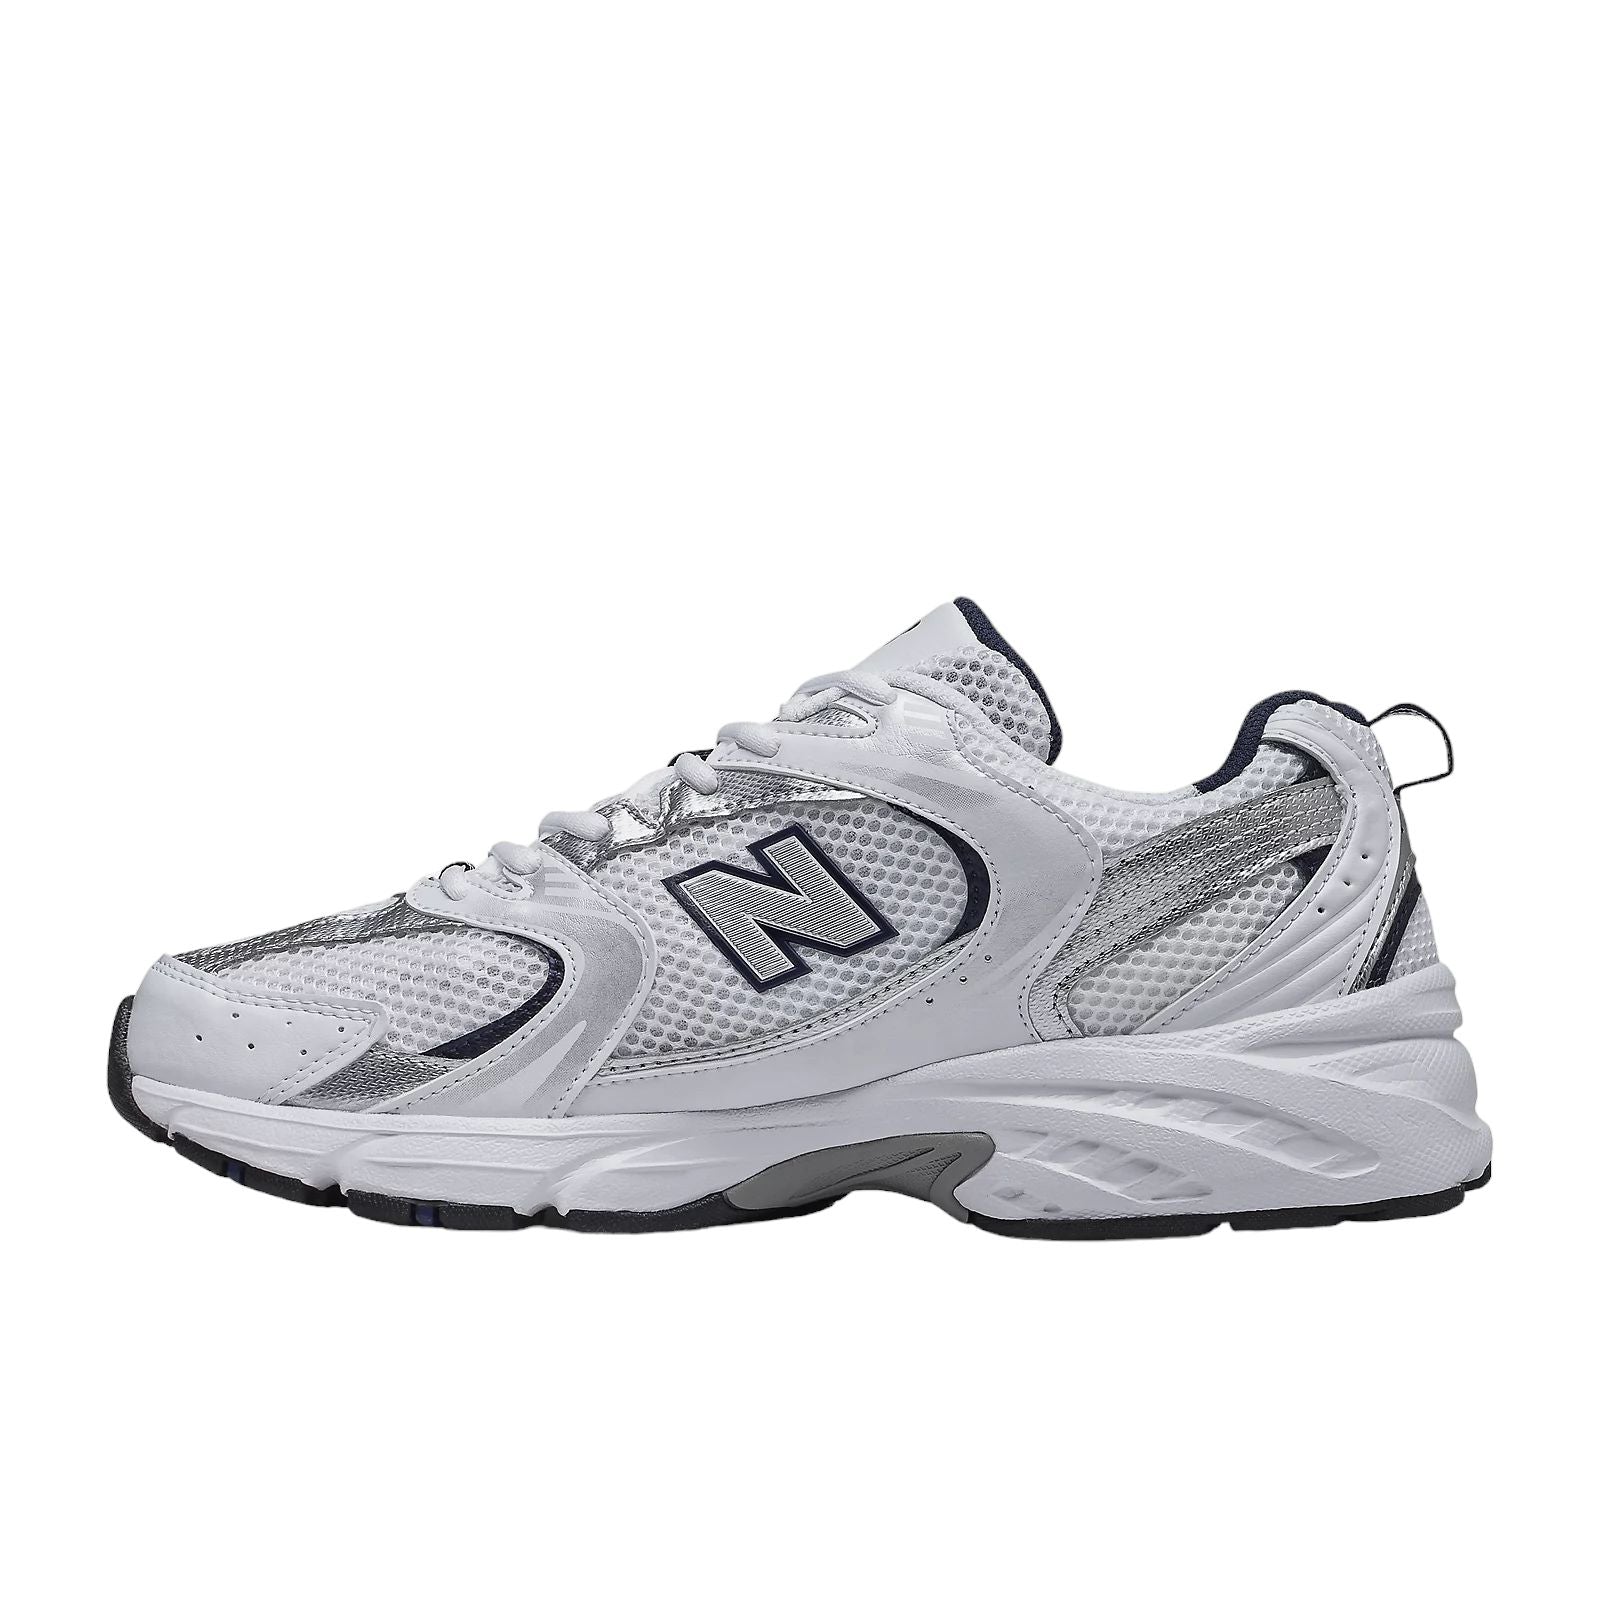 530 Shoes White/Natural Indigo 